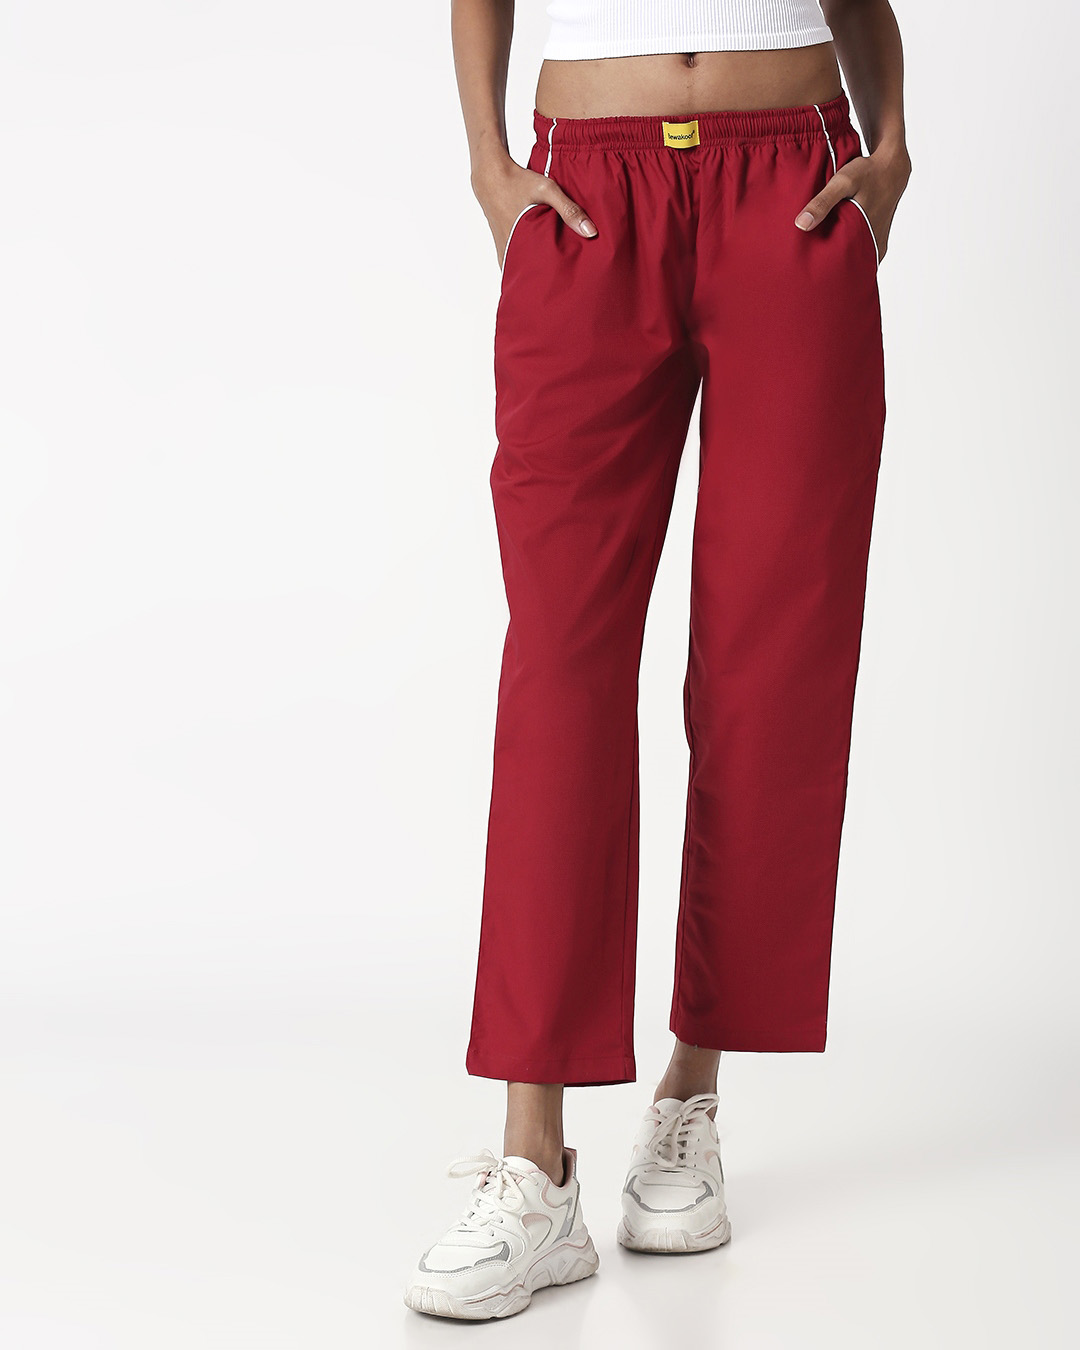 Shop Cherry Red Plain Pyjamas-Back